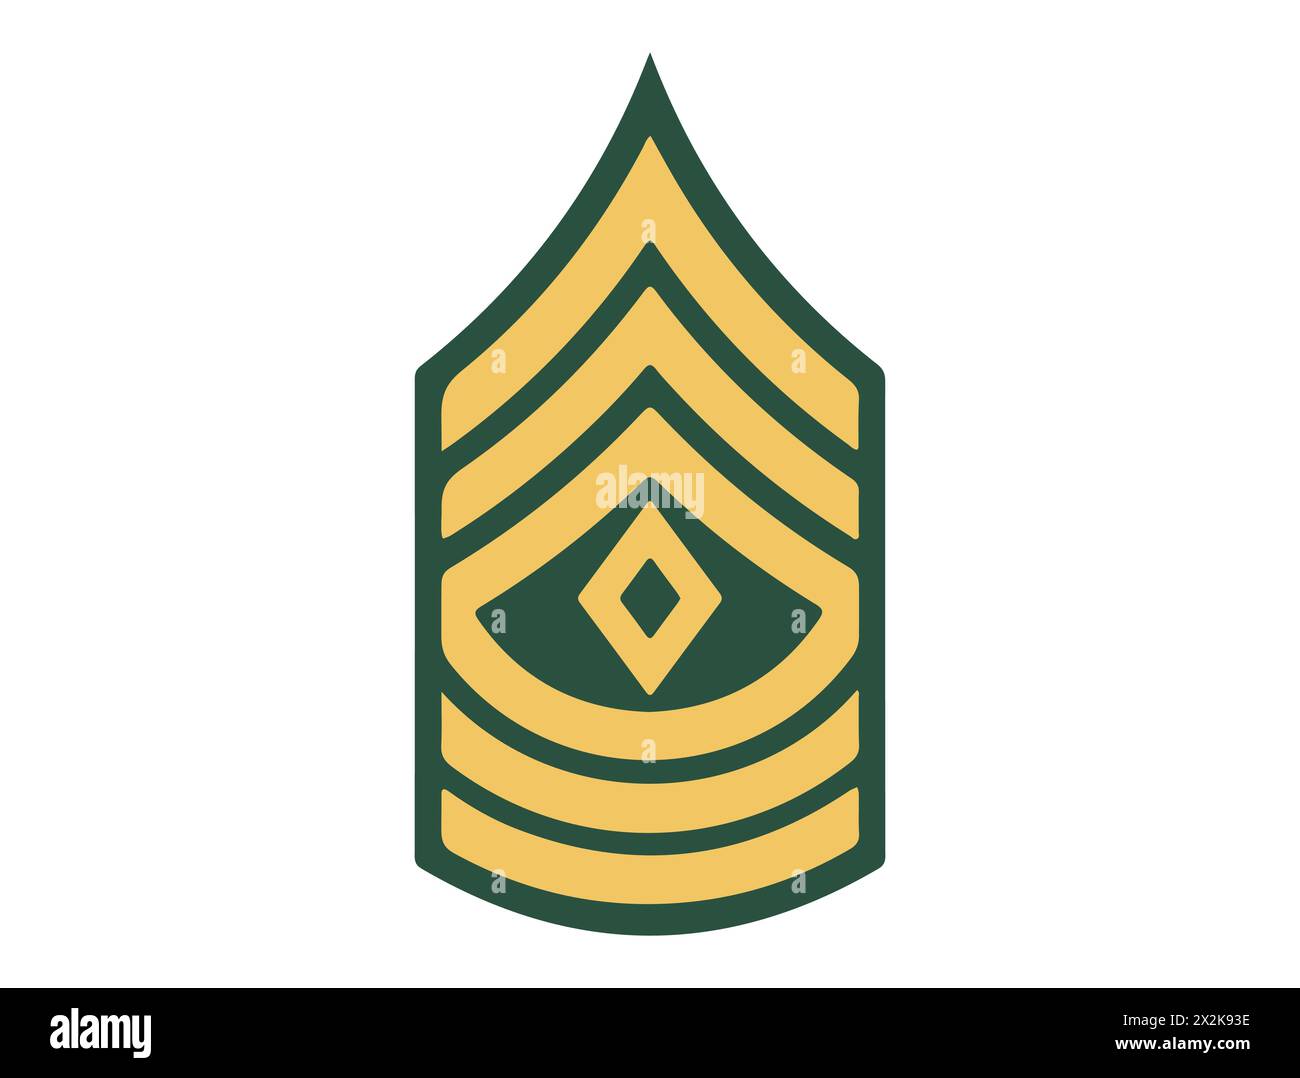 First sergeant badge silhouette vector art Stock Vector